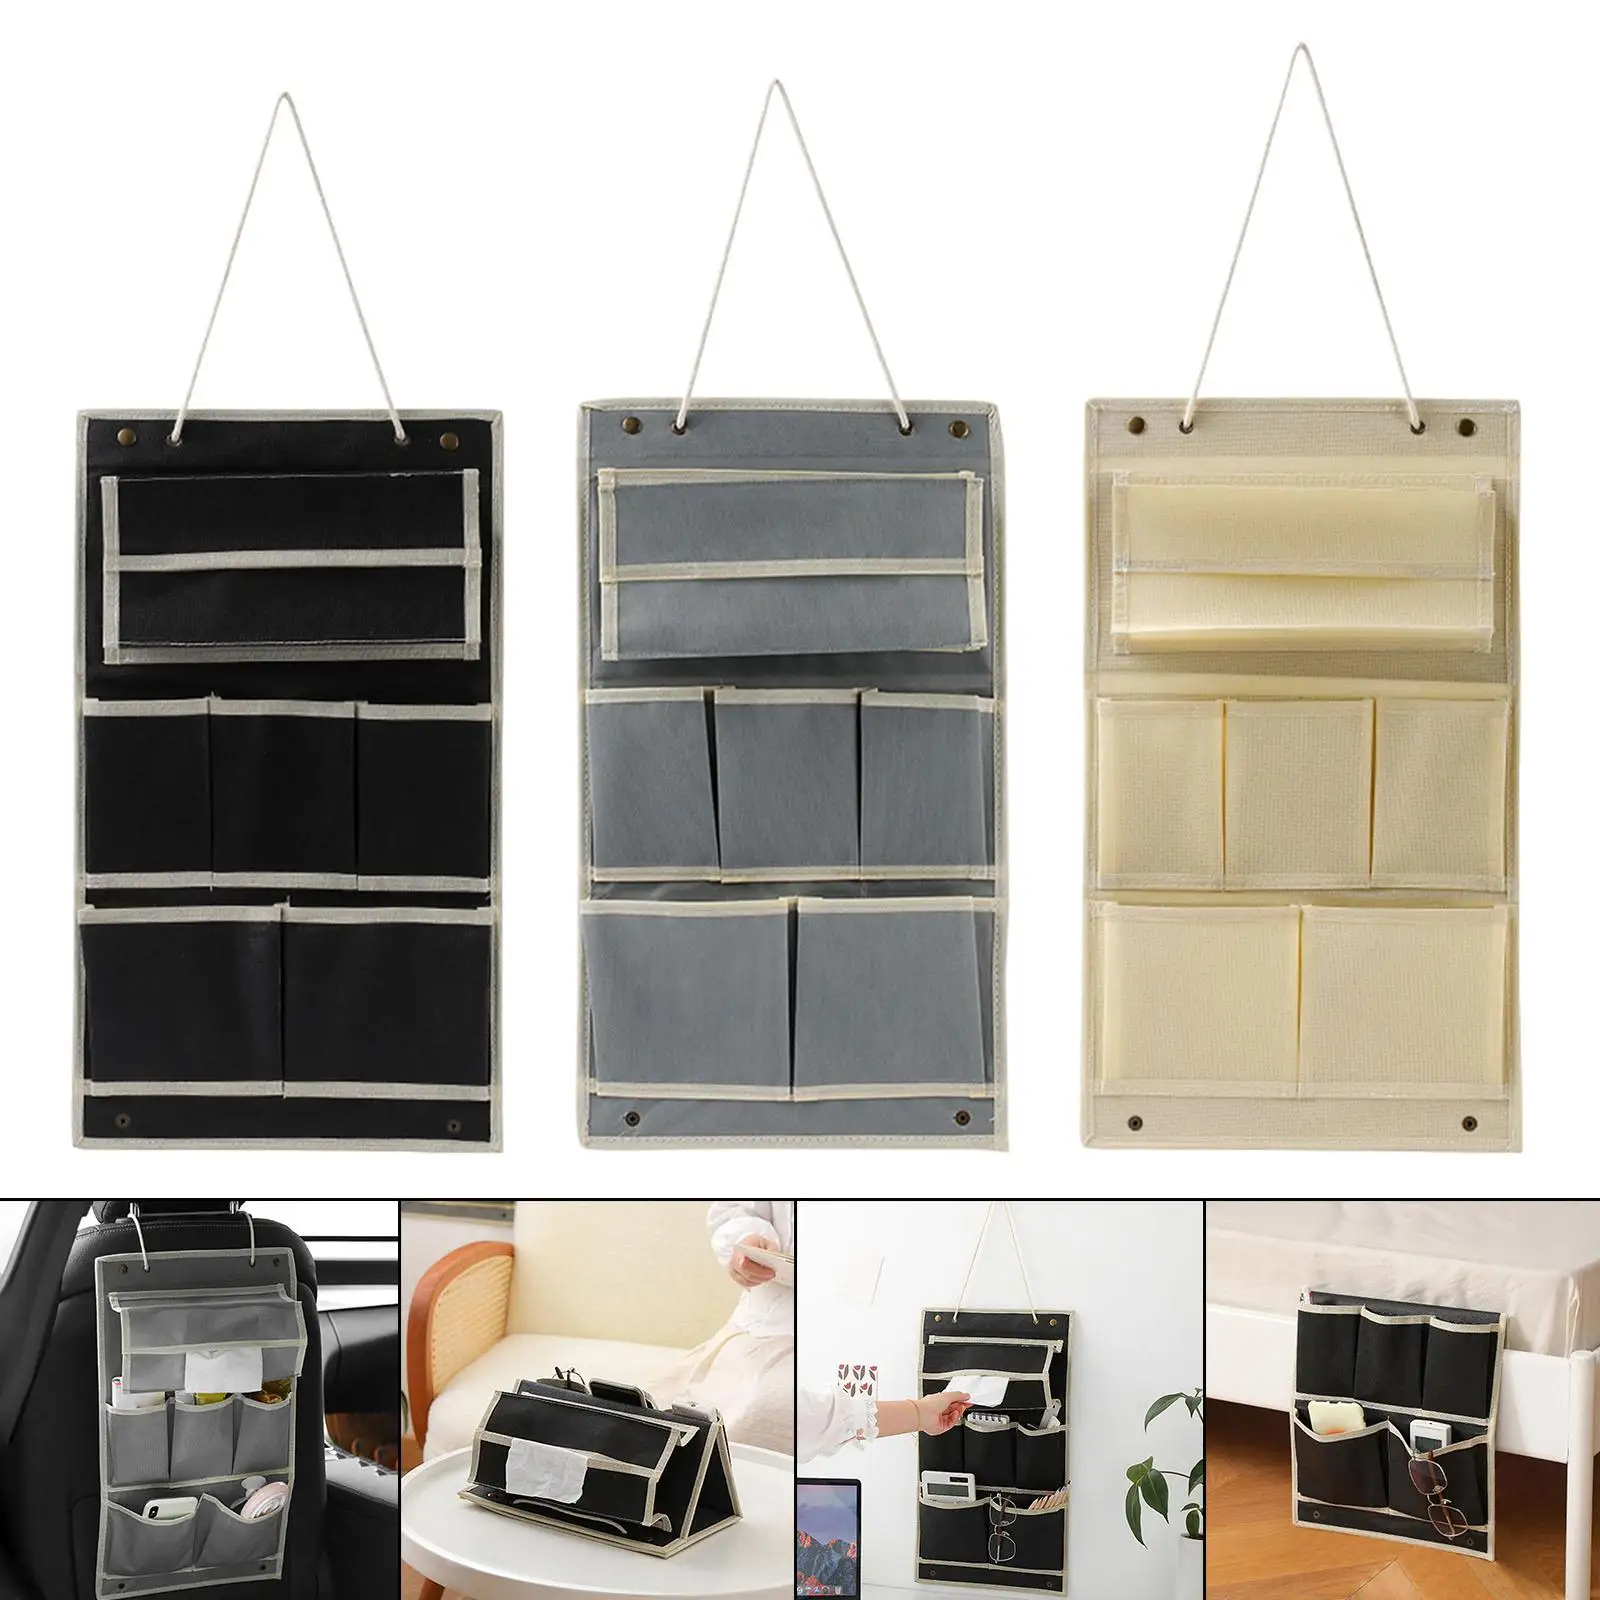 Door Closet Hanging Storage Bag Tissue Holder Foldable Wardrobe Organizer Jewelry Keys Sundries Pouch for Dormitory Bathroom Car